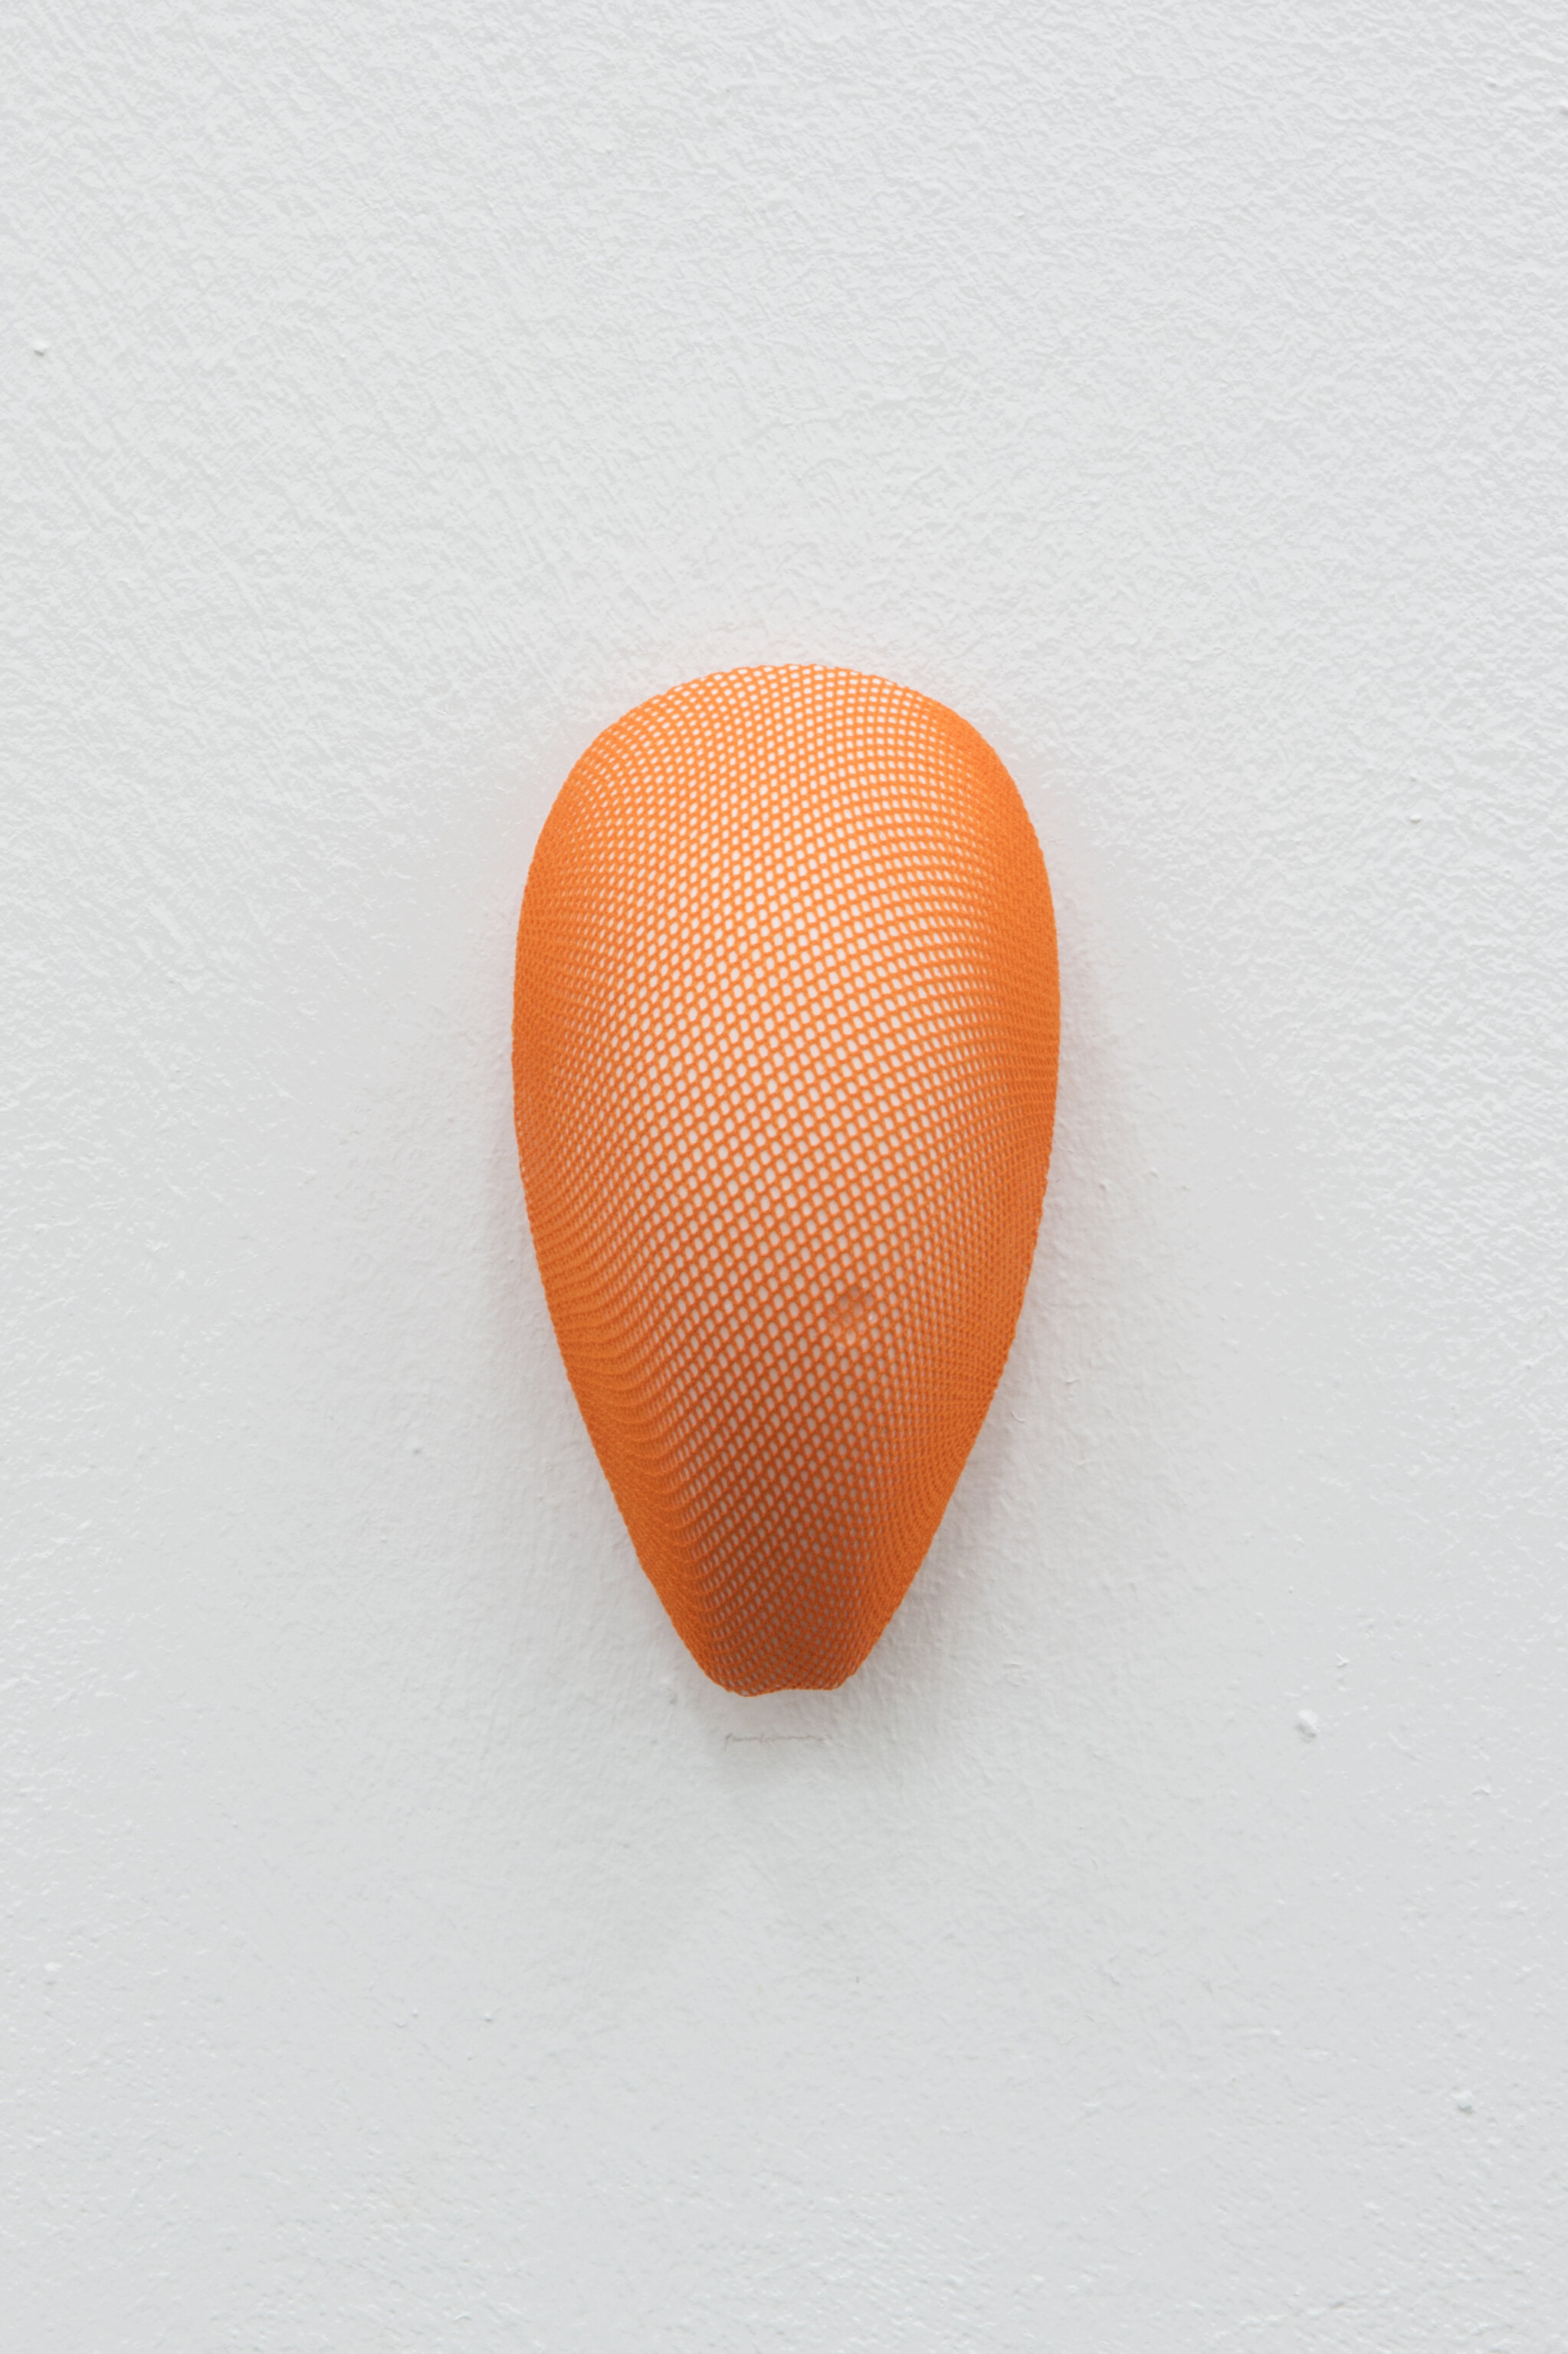 Daphne Ahlers, Orange pill, 2019